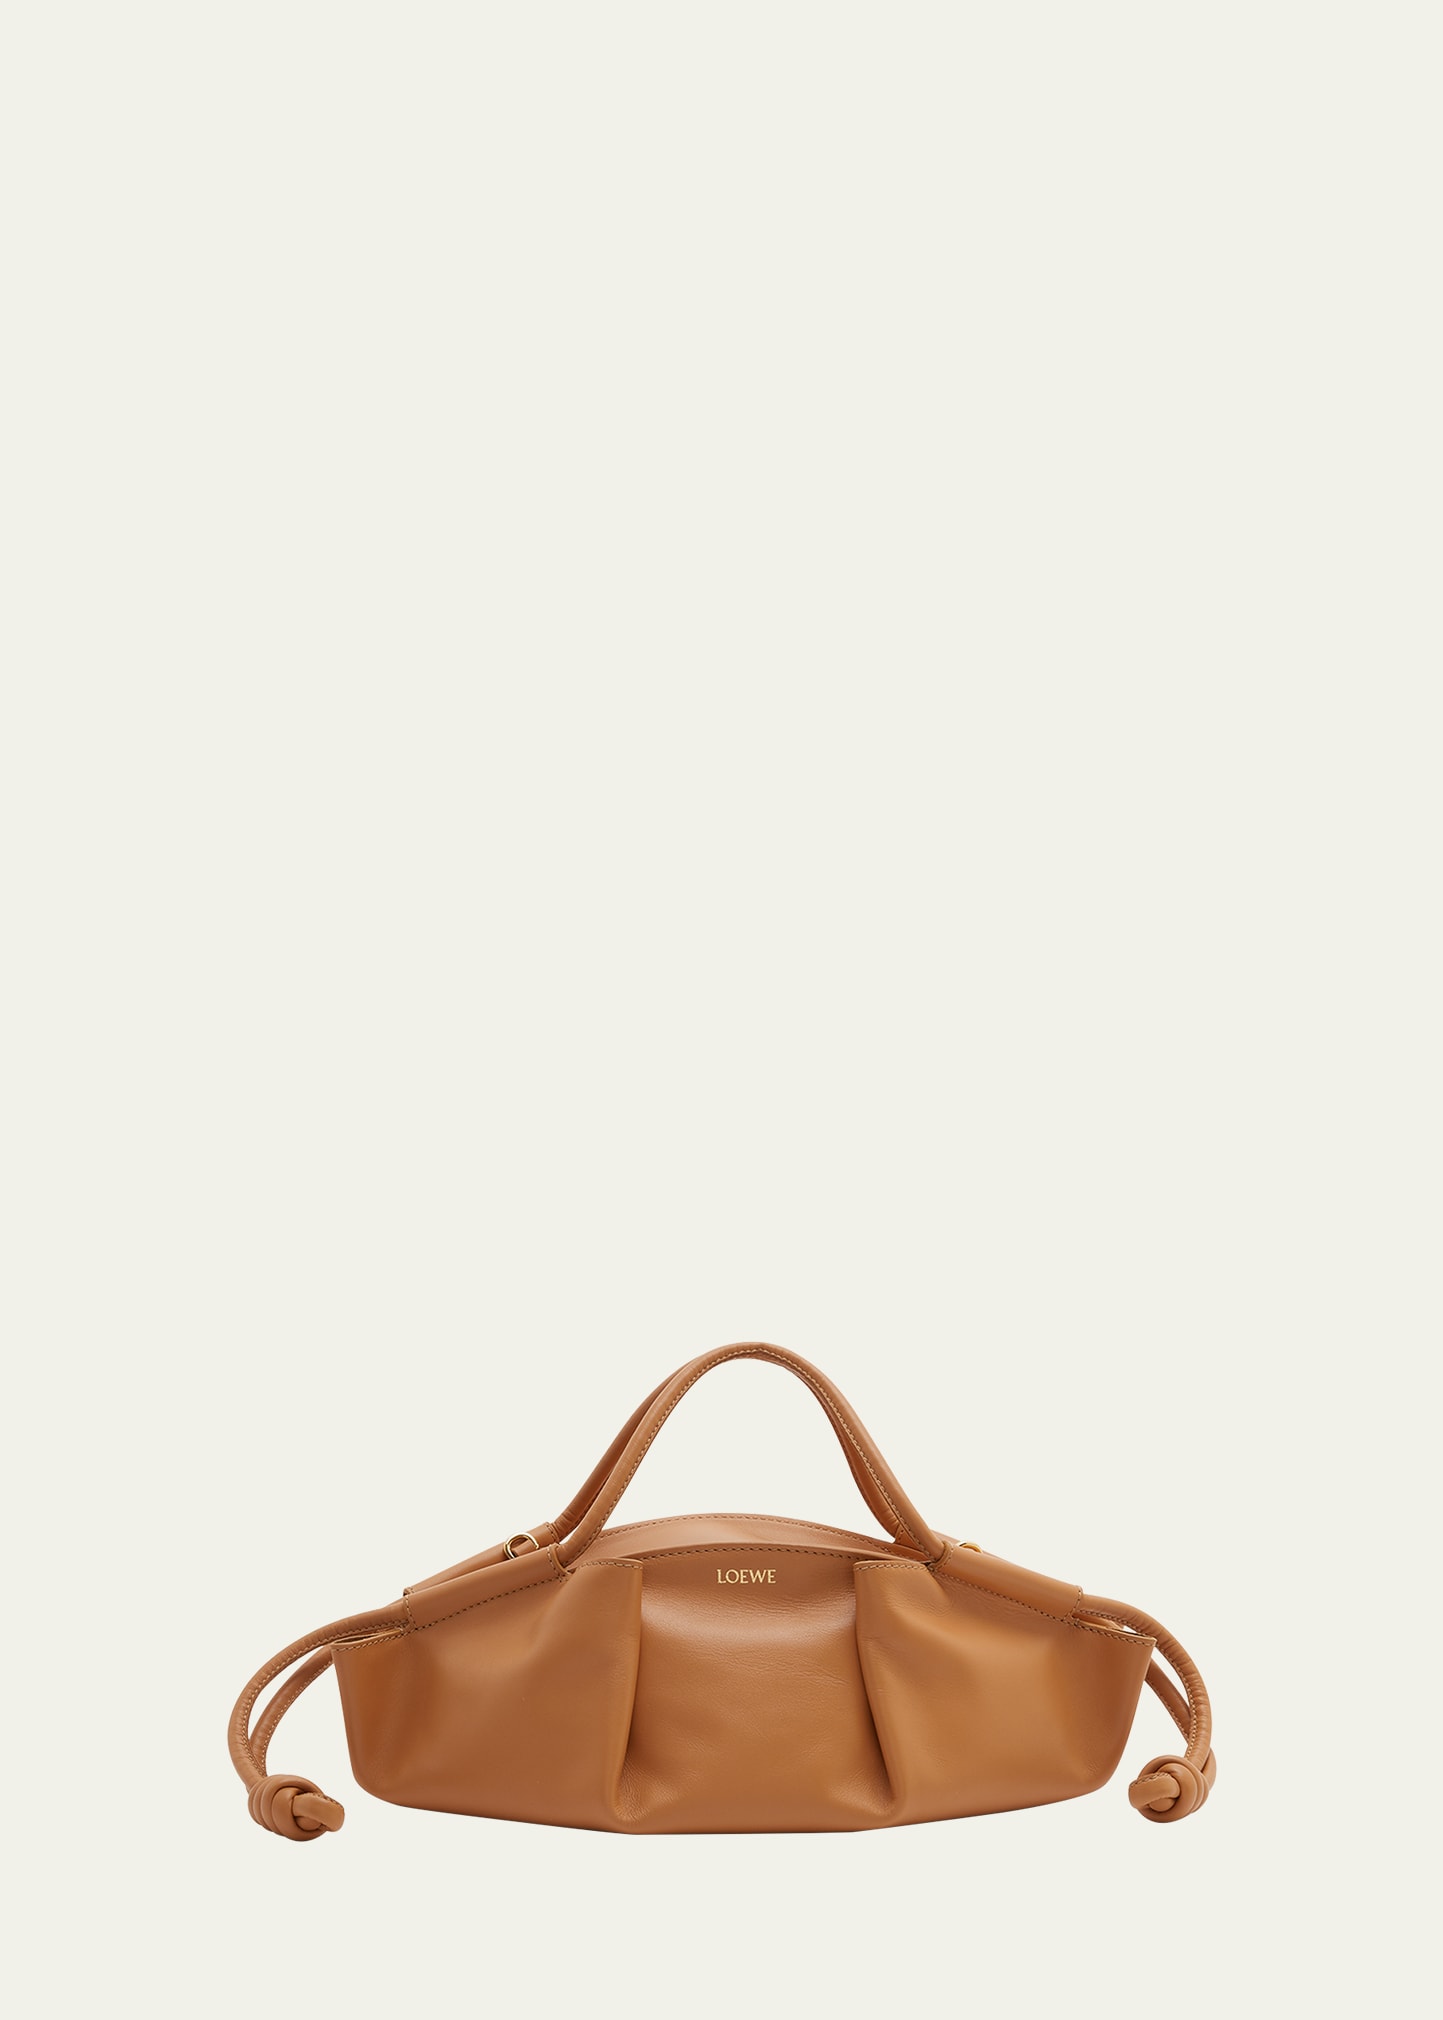 Loewe Paseo Small Leather Top-handle Bag In Warm Desert